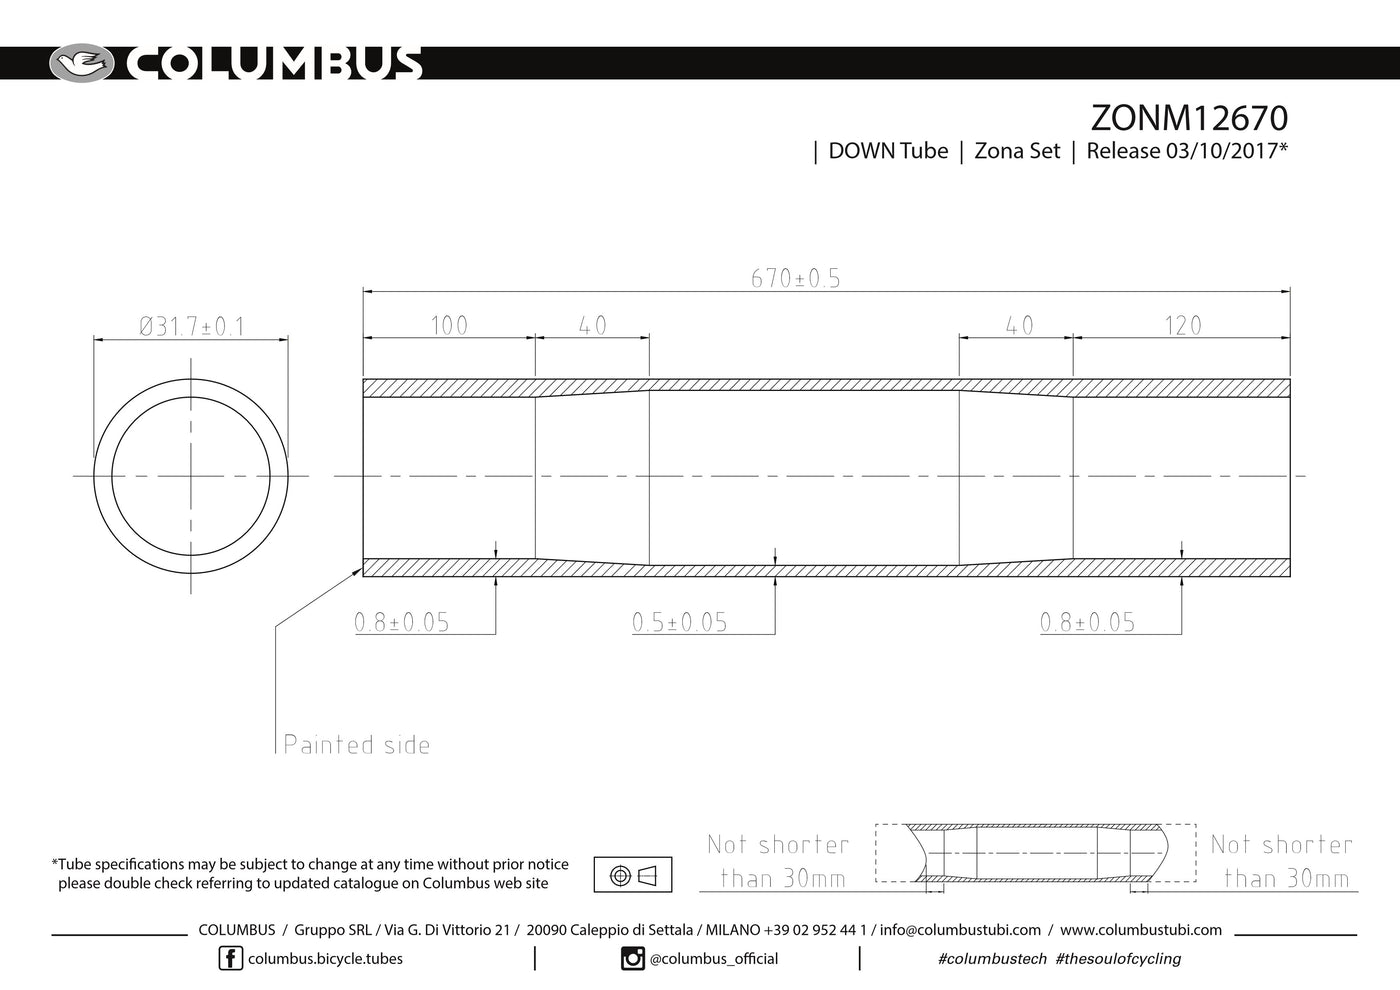 ZONM12670 - Columbus Tubing Zona down tube - 31.7 diameter - .8/.5/.8 wall thickness. Length = 670